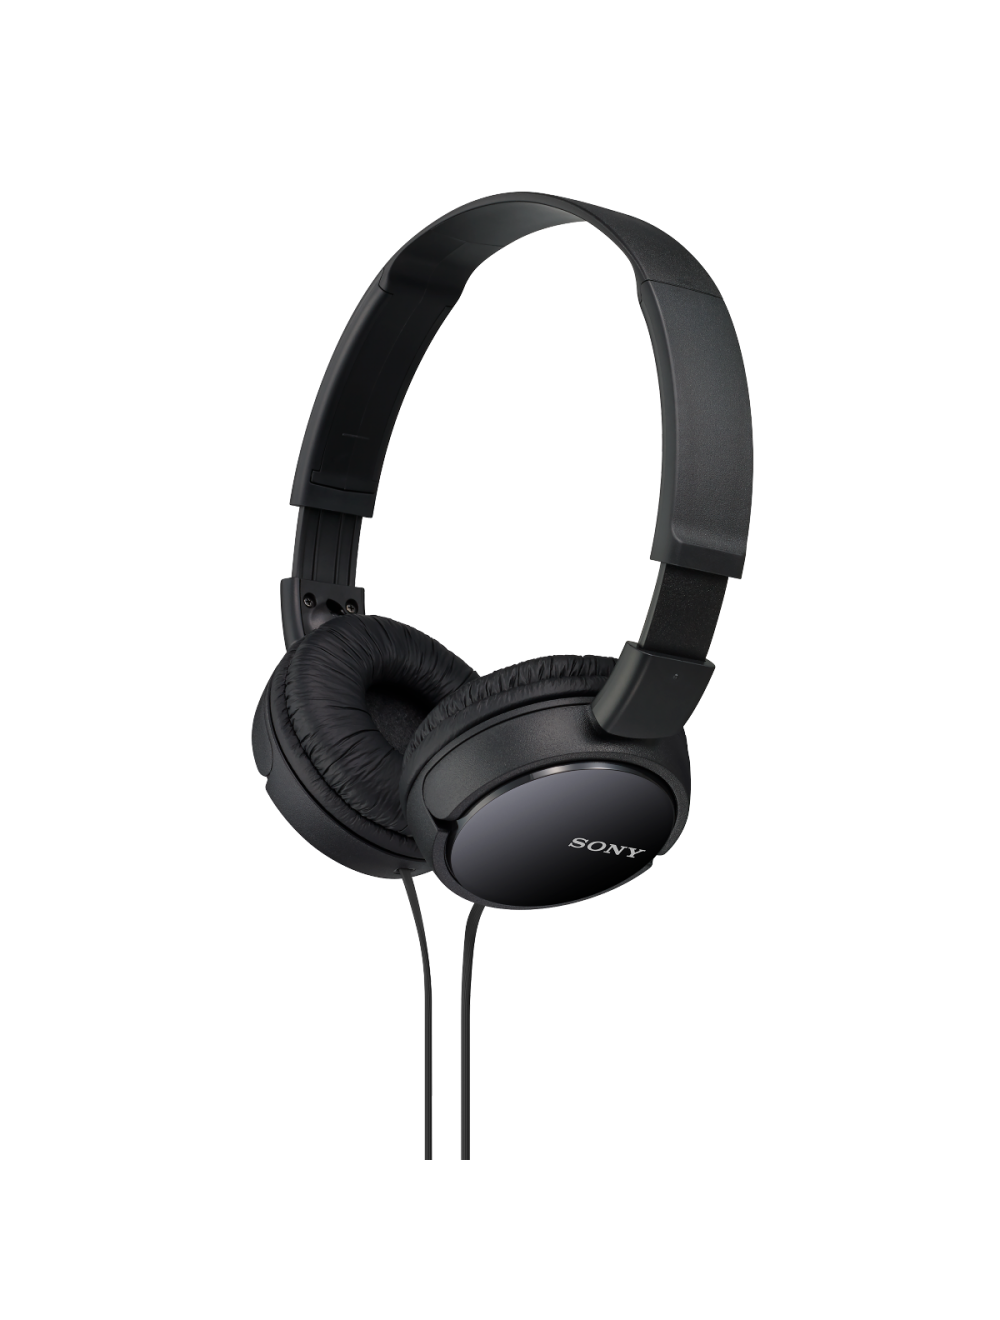 Sony MDR-ZX110 (Black) Headphones Earphone Foldable